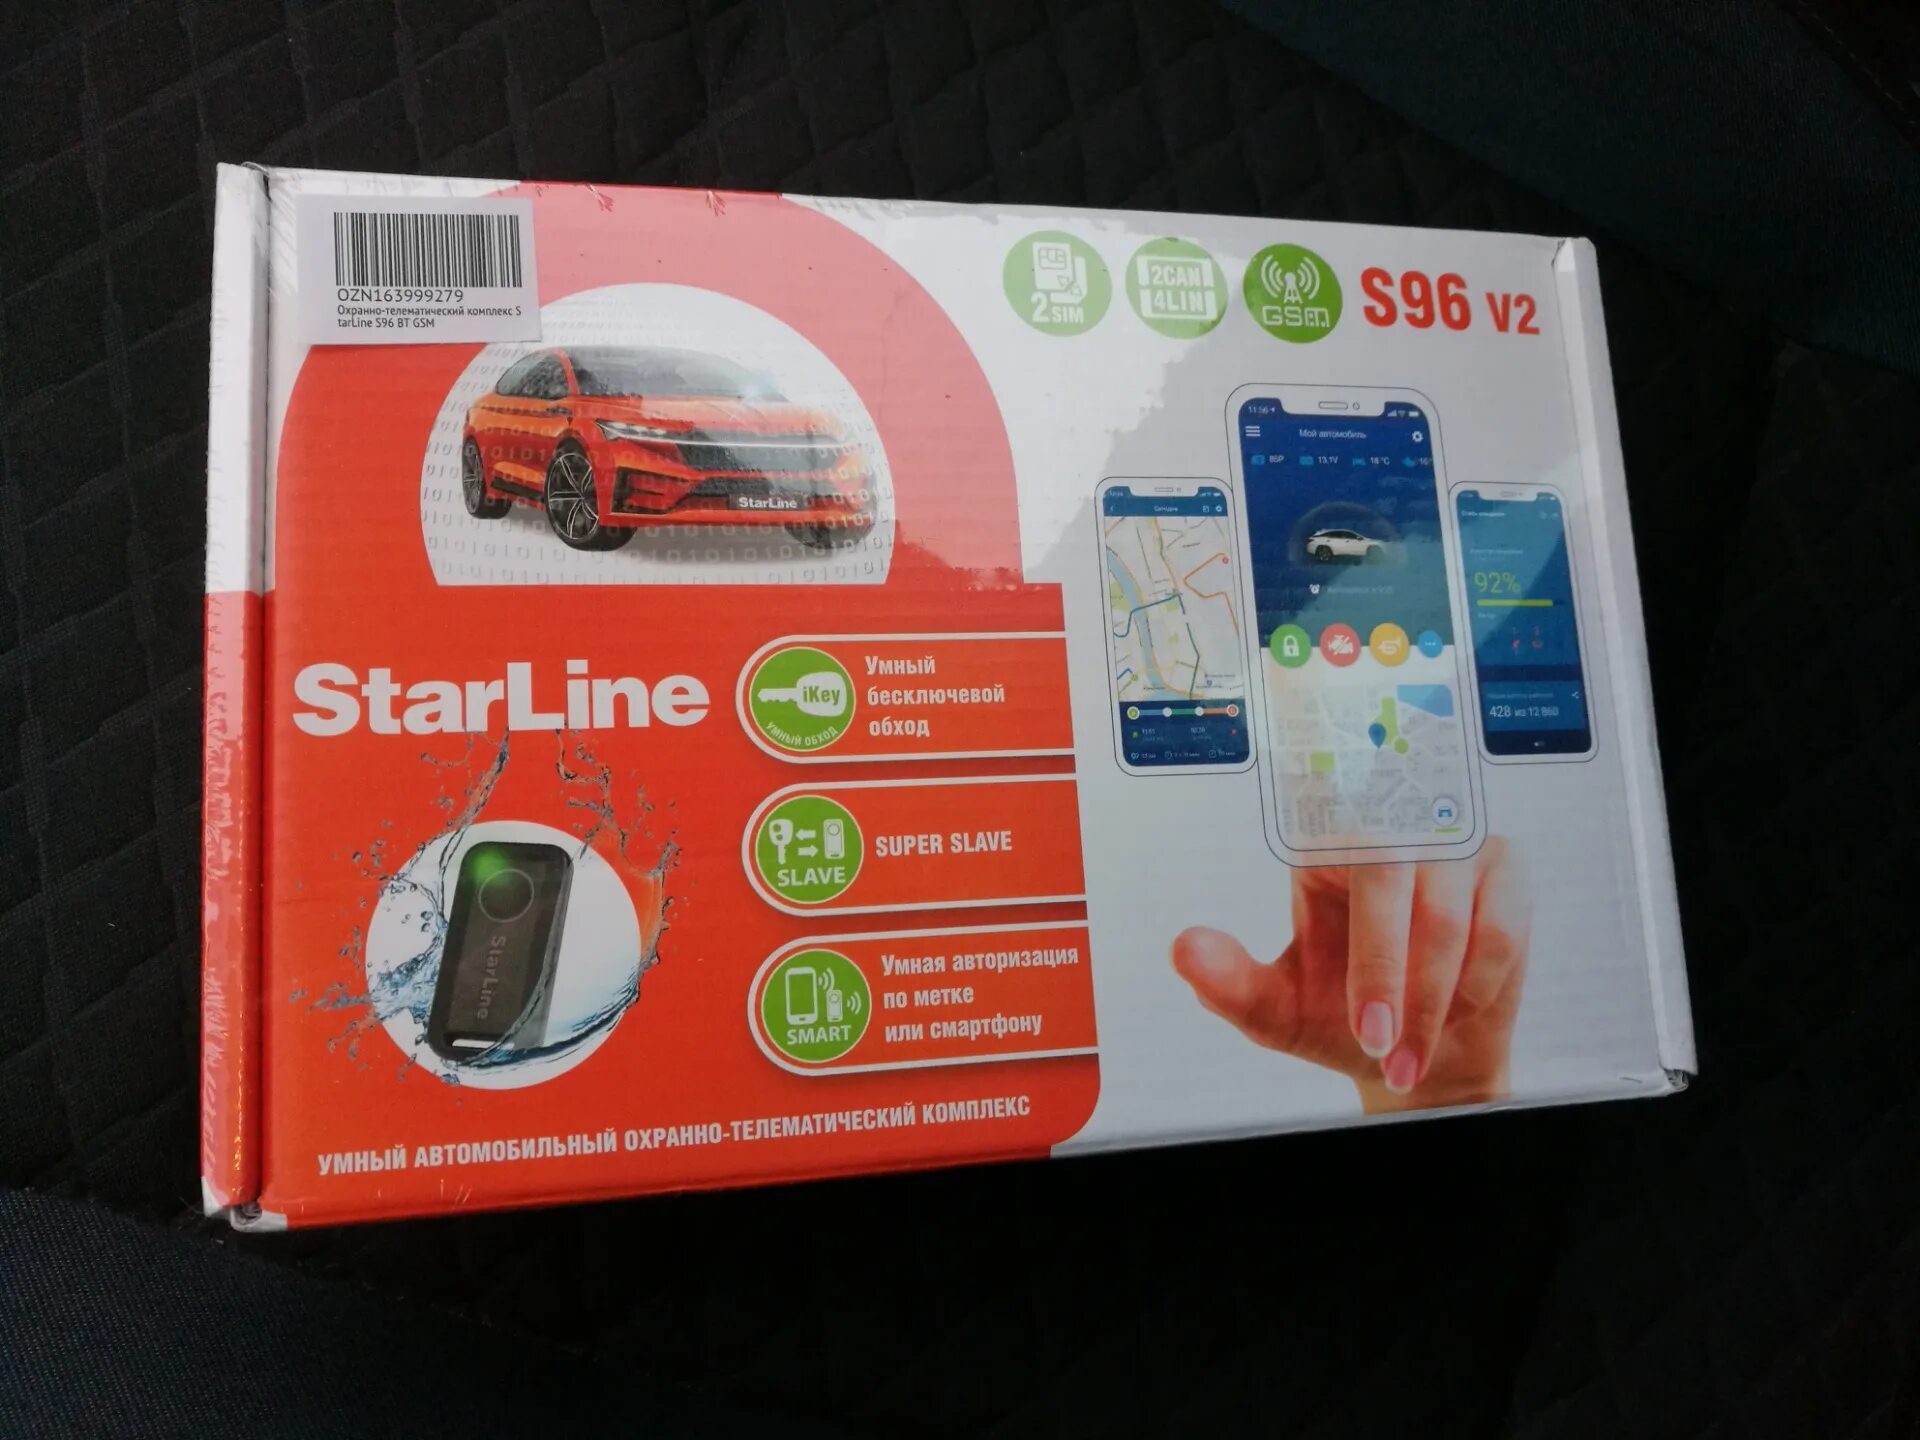 Starline s96 bt gsm 2can 4lin. Старлайн с96 v2. STARLINE s96 v2 BT 2can+4lin 2sim GSM GPS. Автосигнализация STARLINE s96 GSM/GPS ver.2. Старлайн s96 v2.